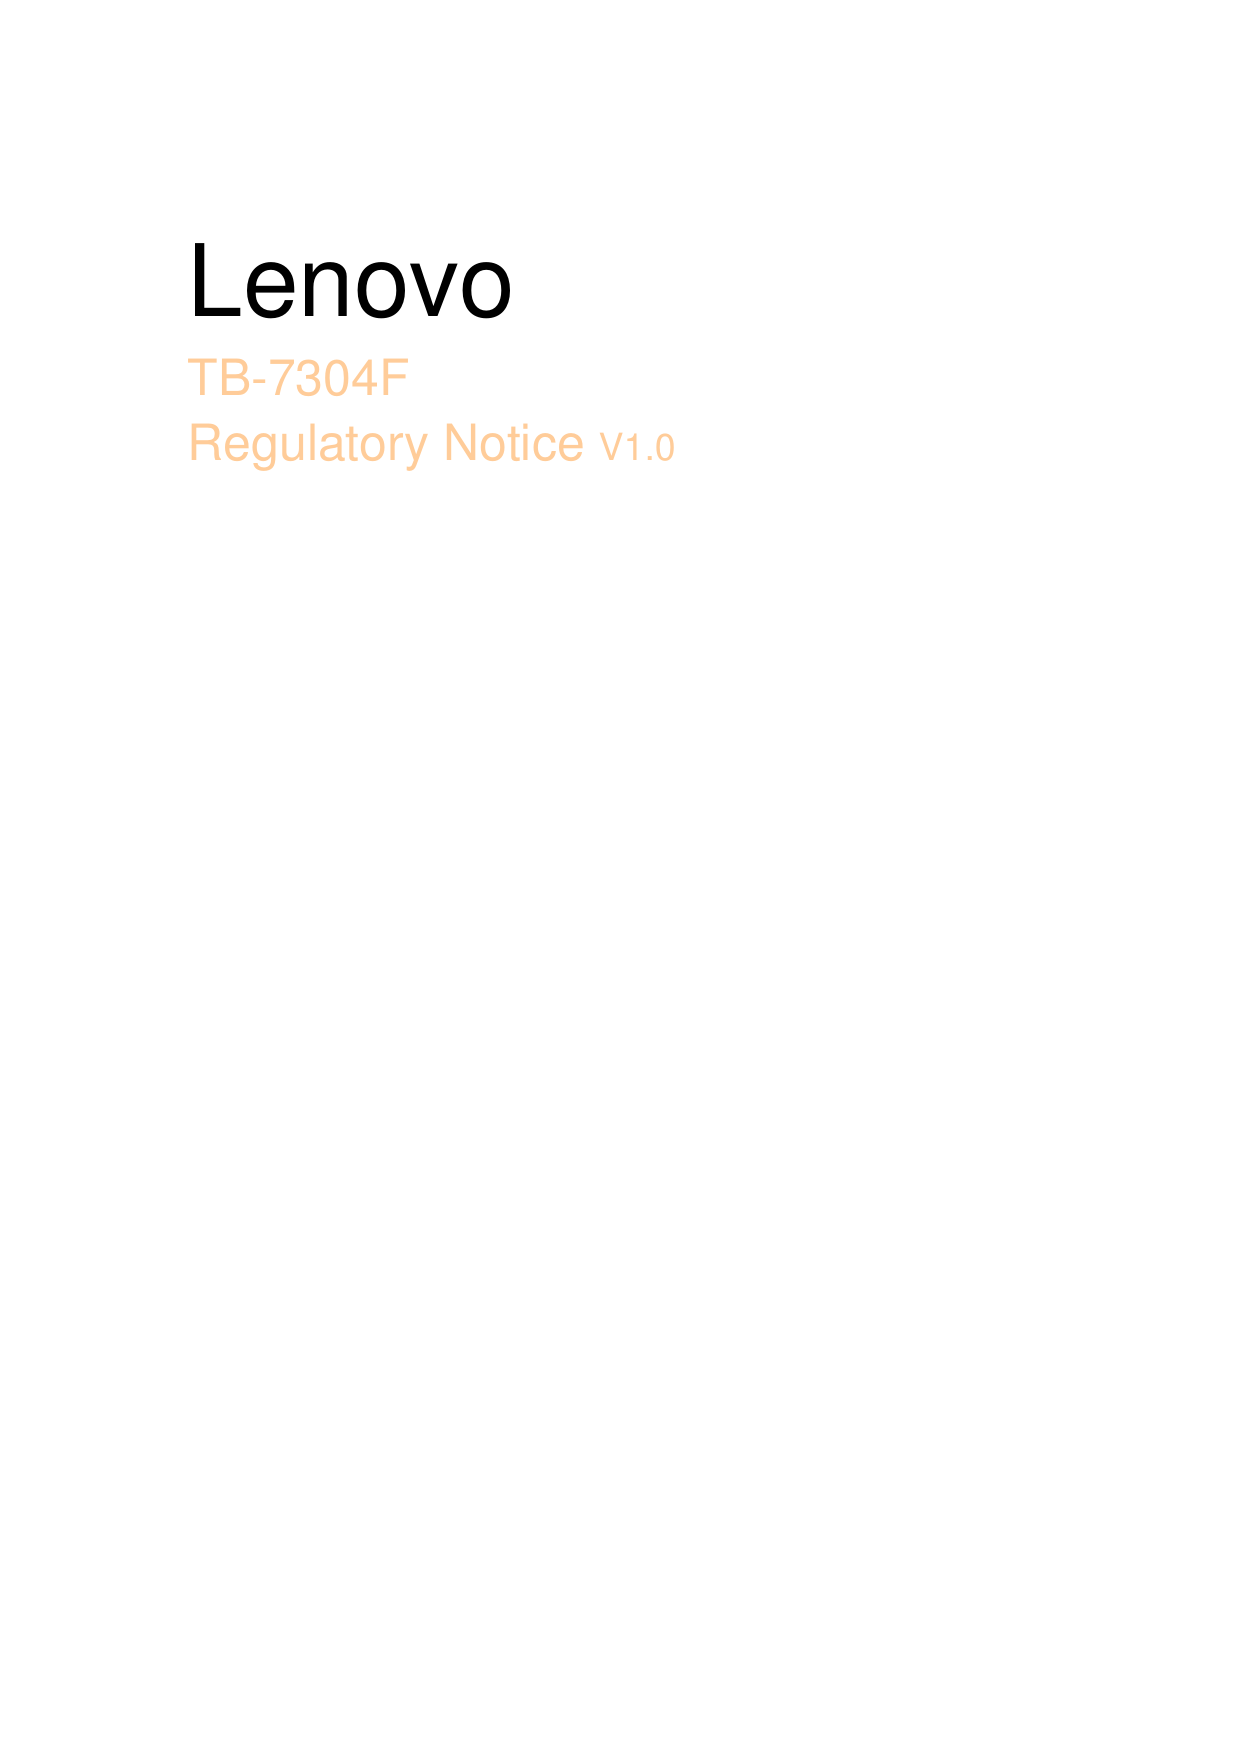   Lenovo TB-7304F Regulatory Notice V1.0                                   